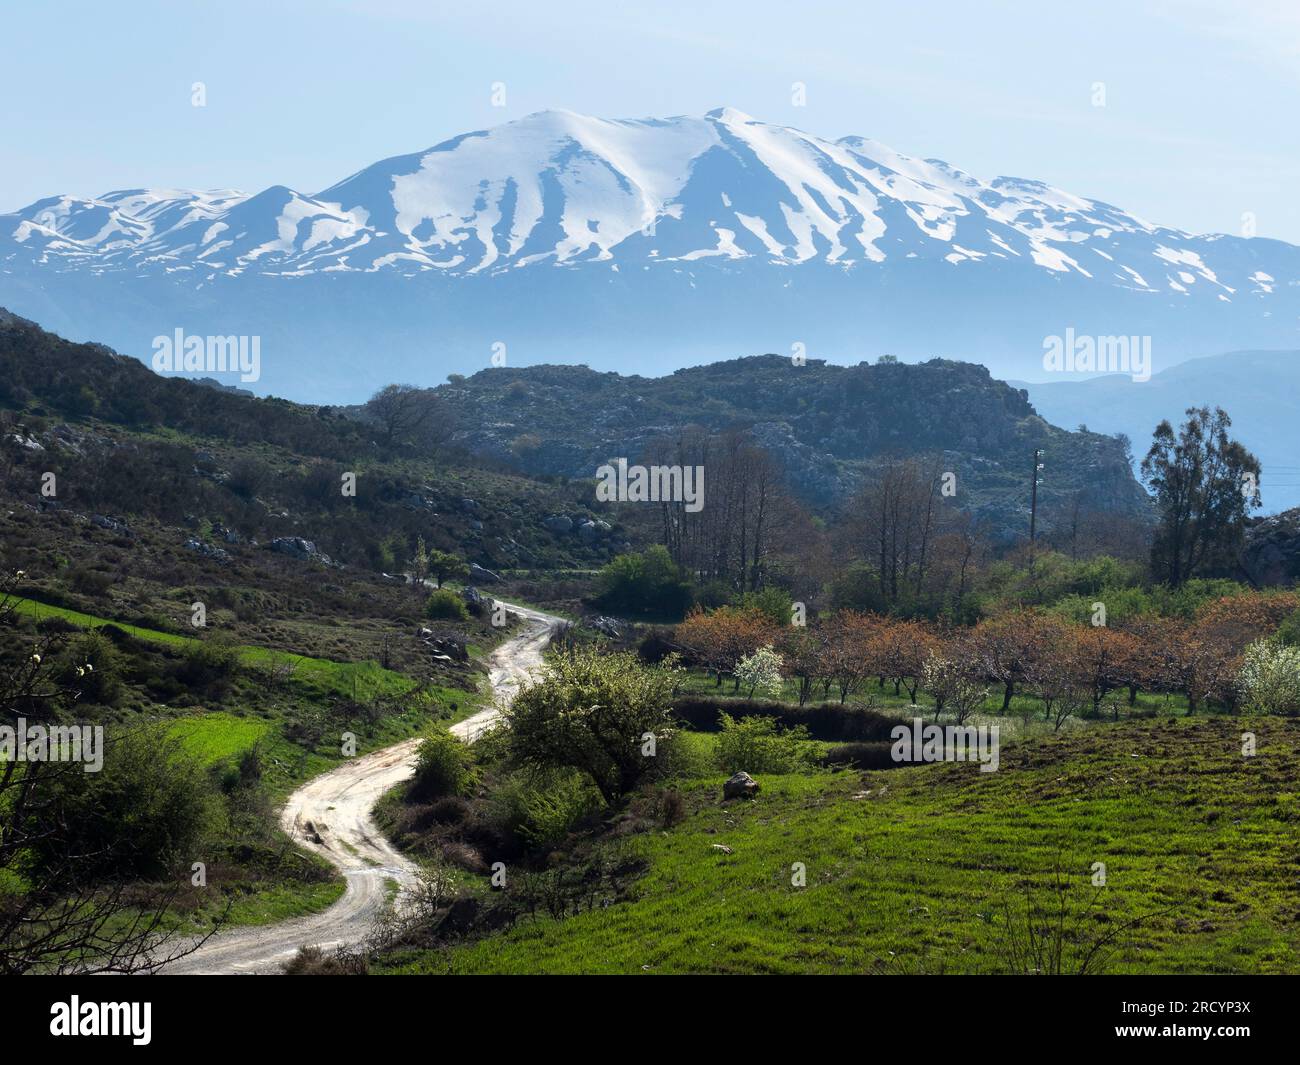 Landscape showing White Mountain Range near Chania, West Crete Stock Photo